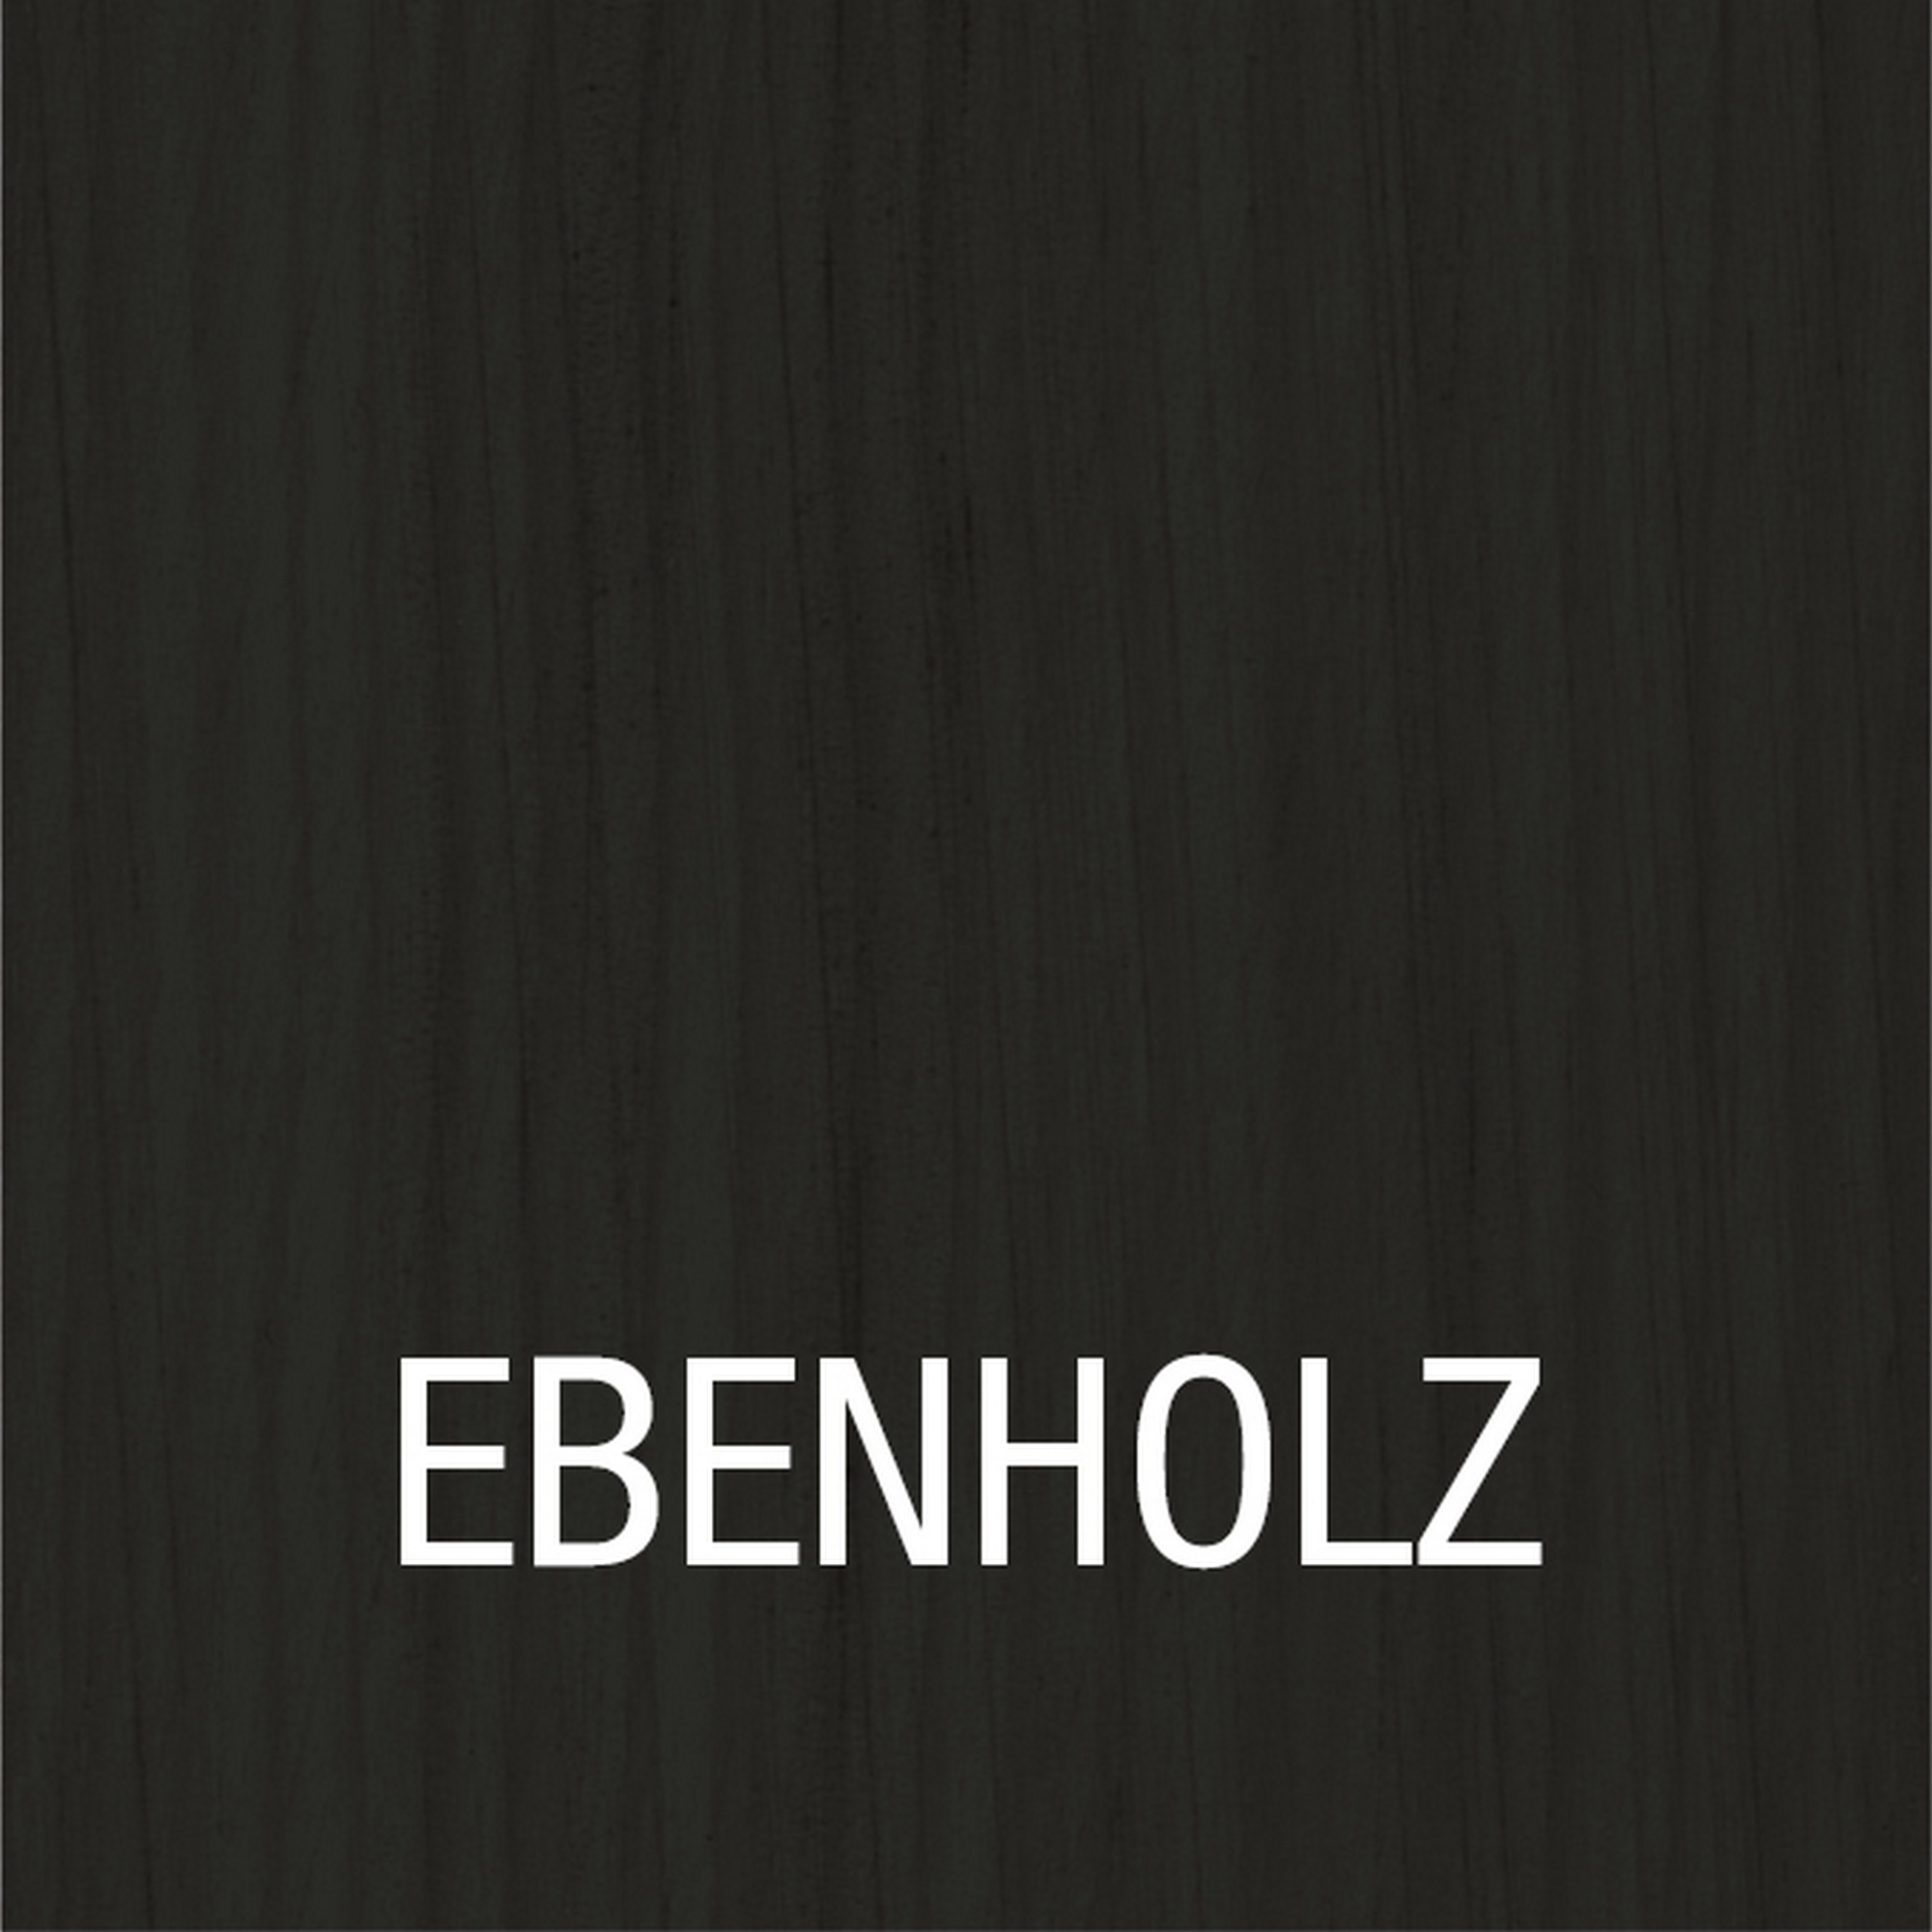 Holzlasur ebenholzfarben 750 ml + product picture